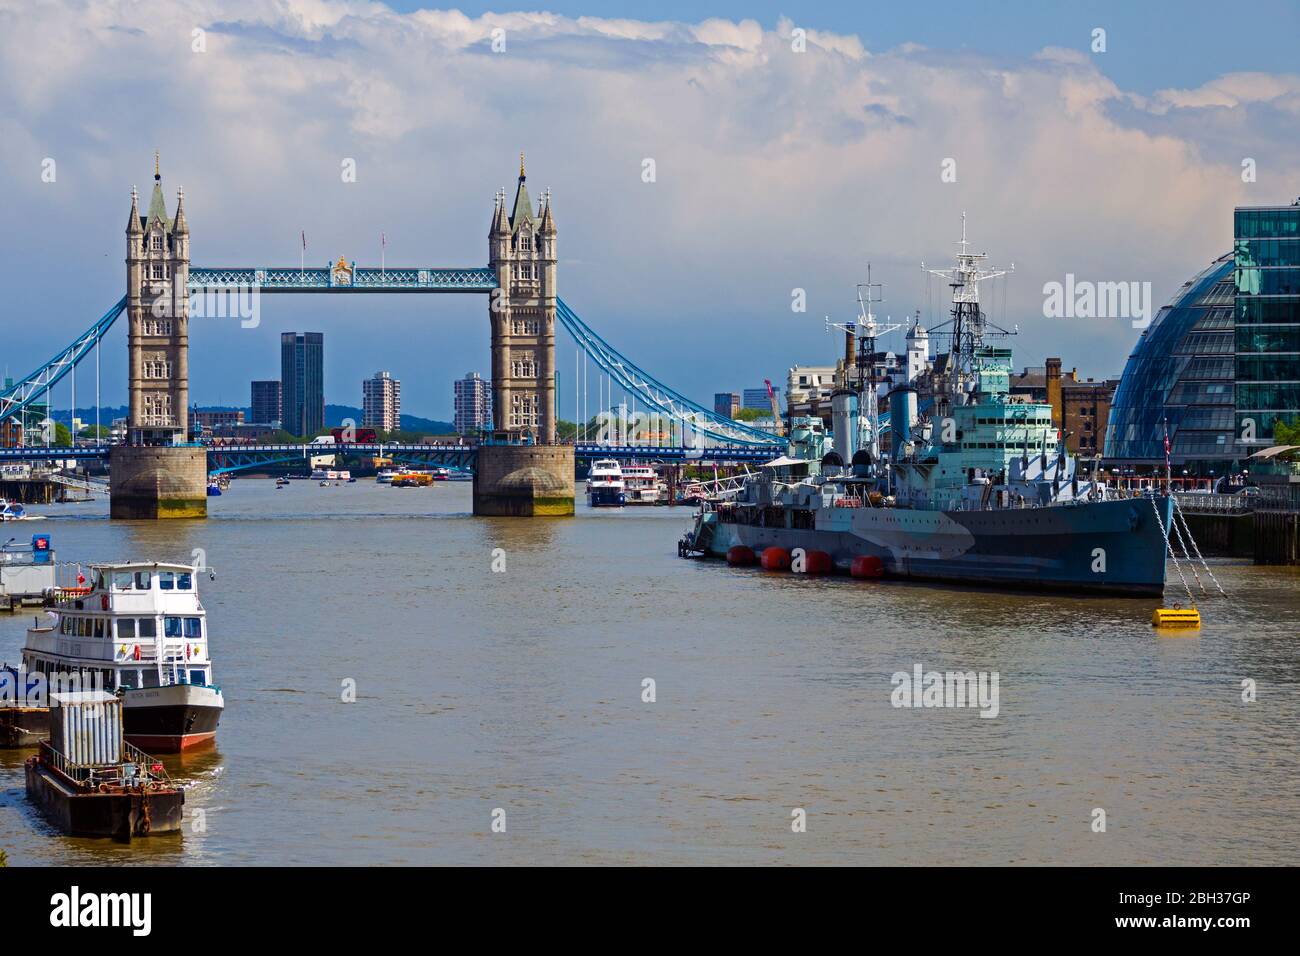 Boat Traffic Tower Bridge London England United Kingdom Capital River Thames UK Europe EU Stock Photo